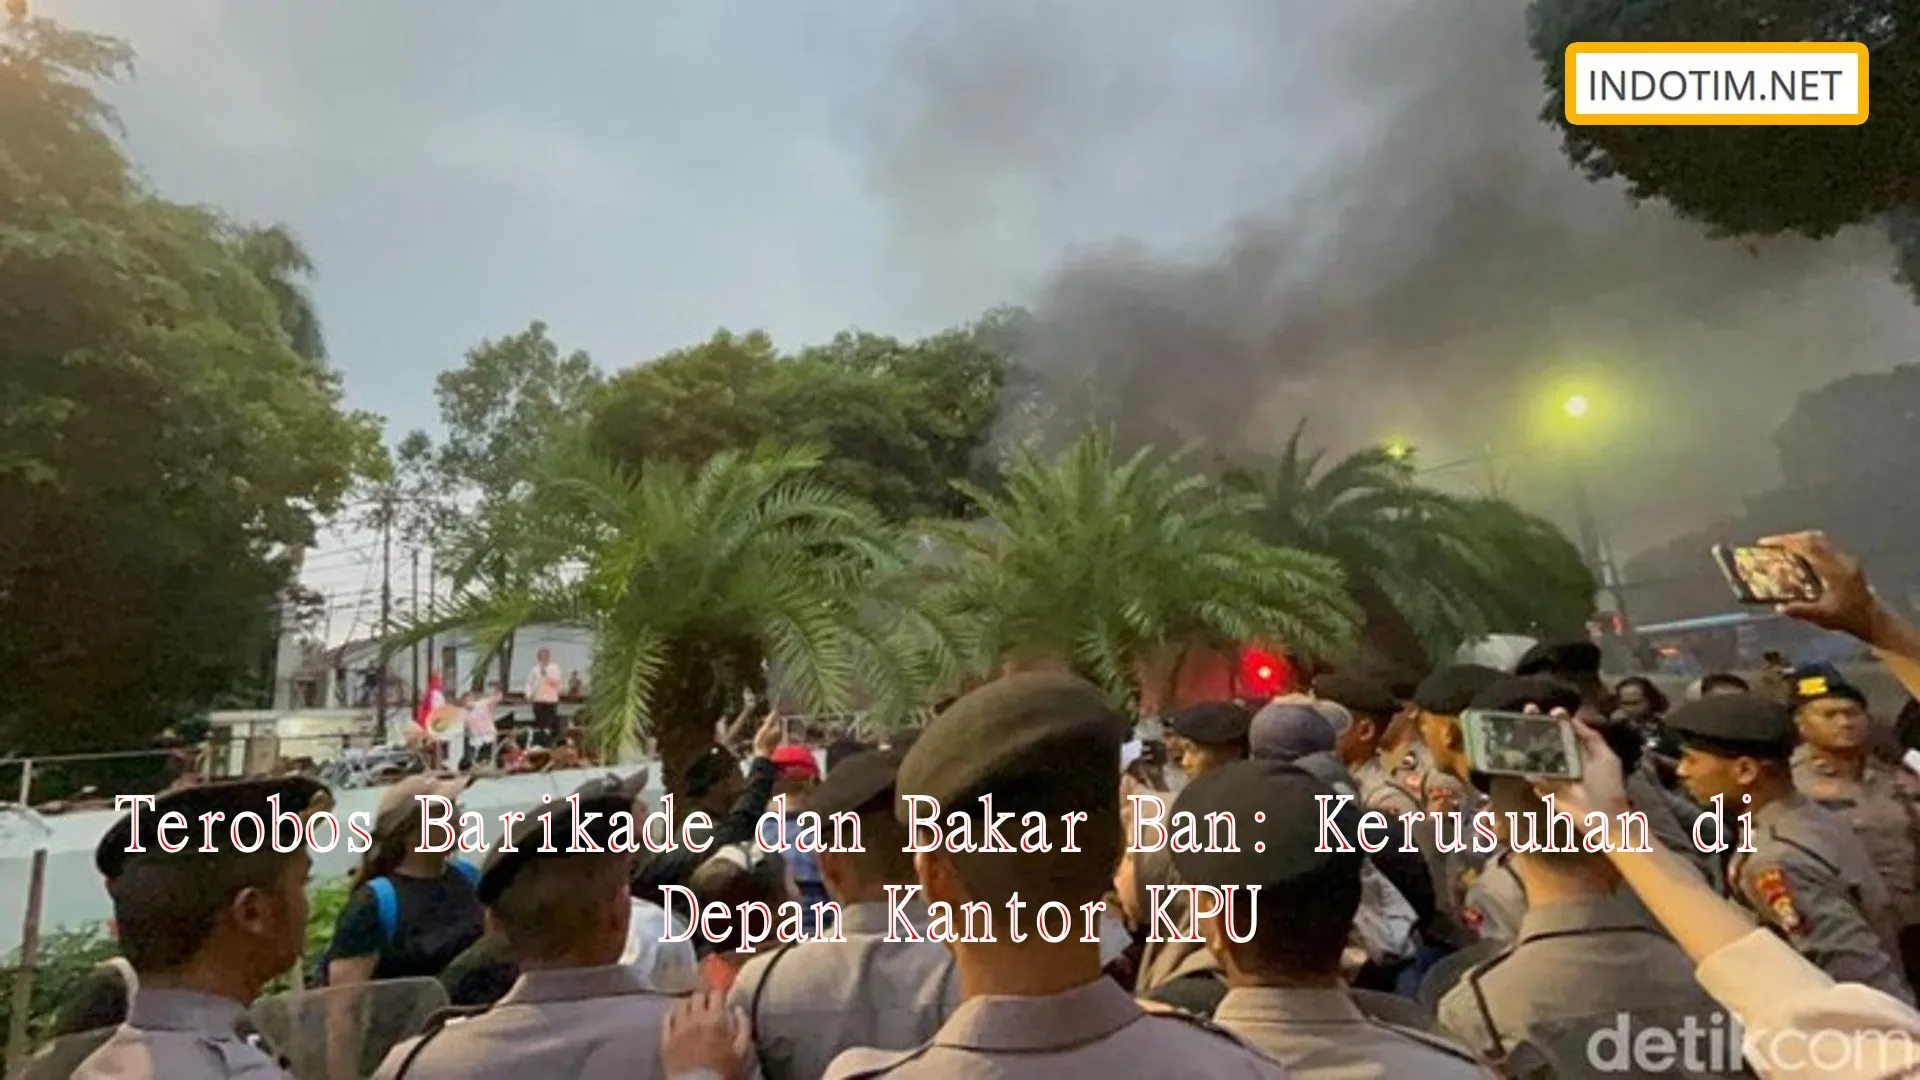 Terobos Barikade dan Bakar Ban: Kerusuhan di Depan Kantor KPU